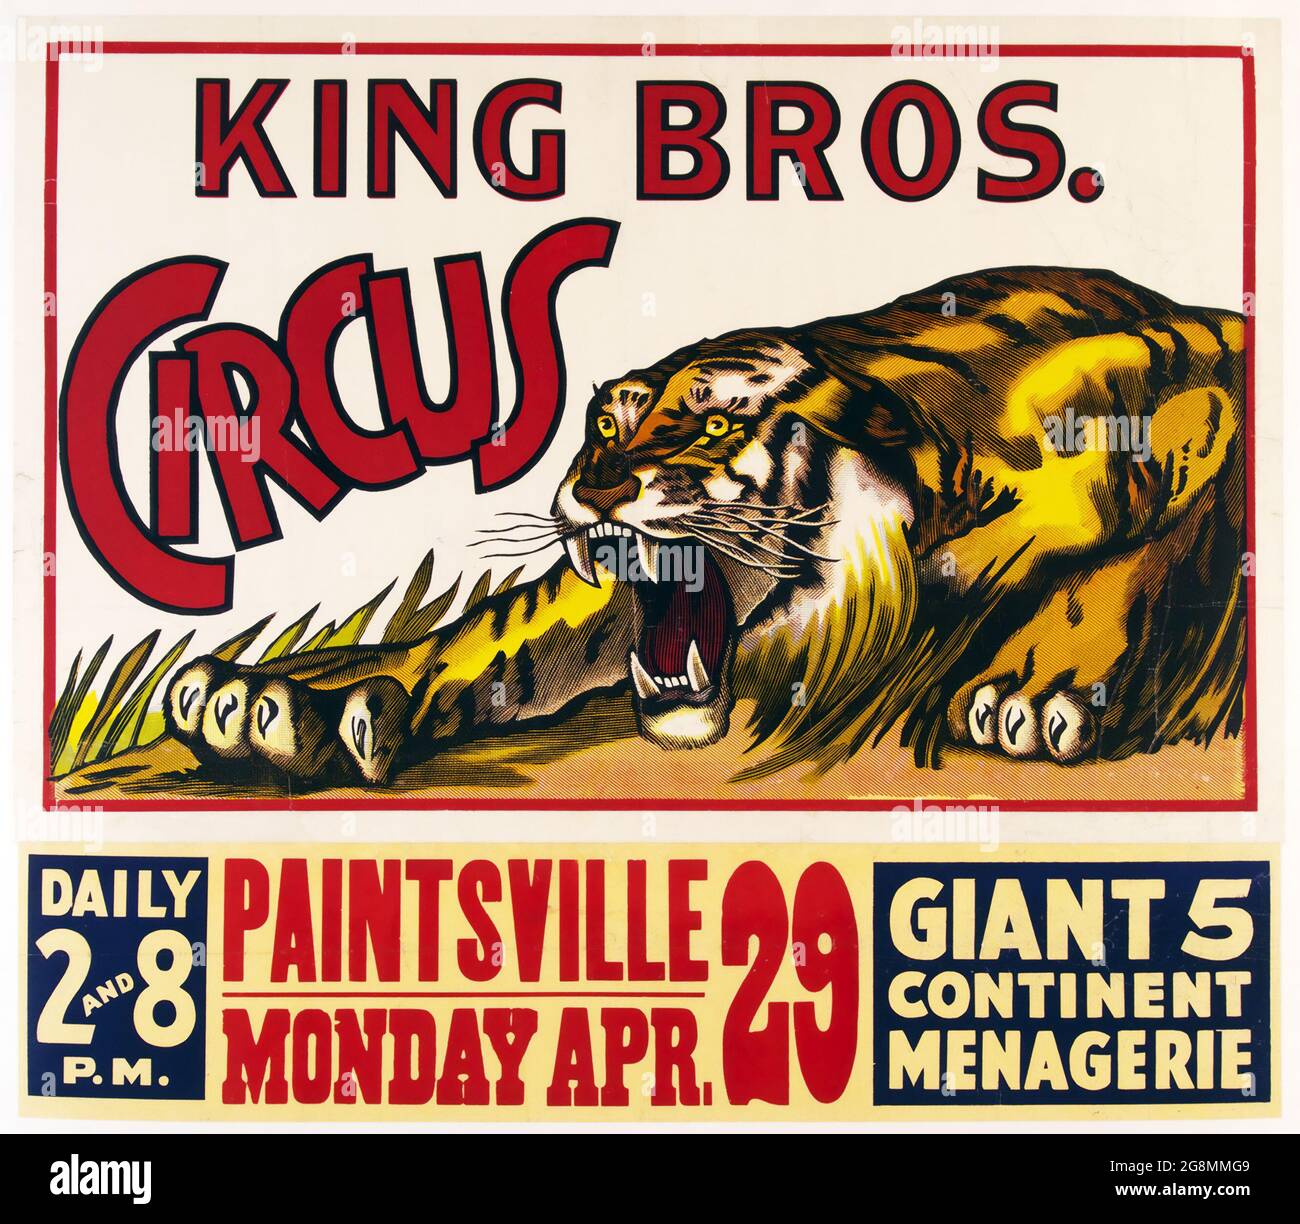 King Bros. Circus. Vintage Circus Poster feat. Ein brüllender Tiger. Paintsville. Riesige Menagerie aus 5 Kontinenten. C 1935. Stockfoto